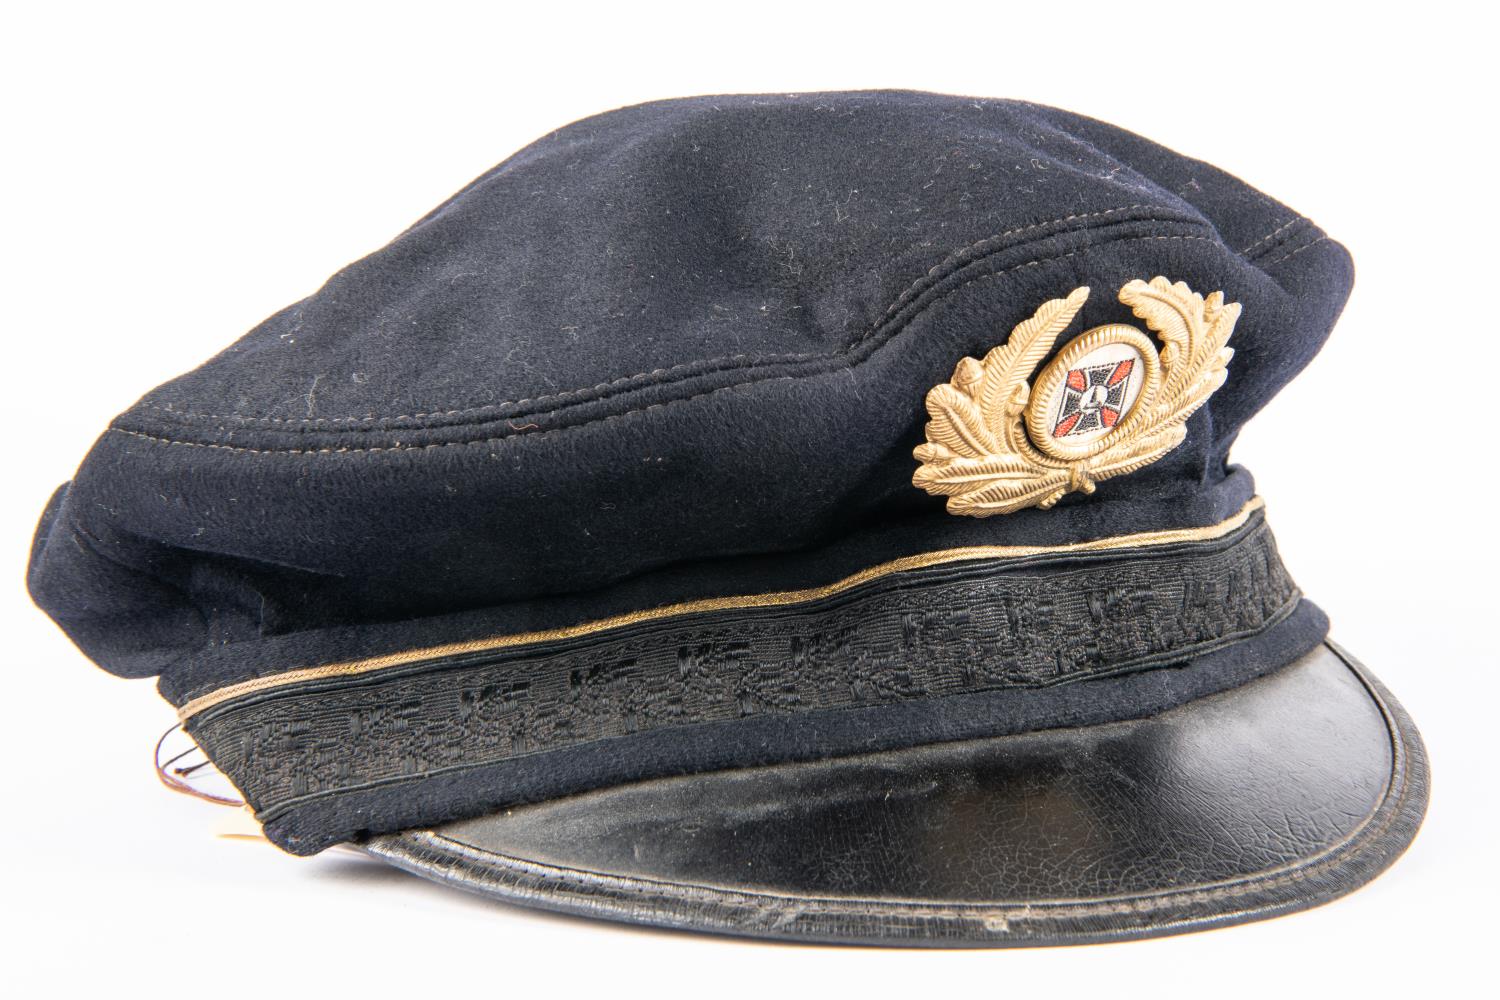 A Third Reich Veterans Association peaked cap, marked inside "Helvetia Ges Gesch", pressed metal